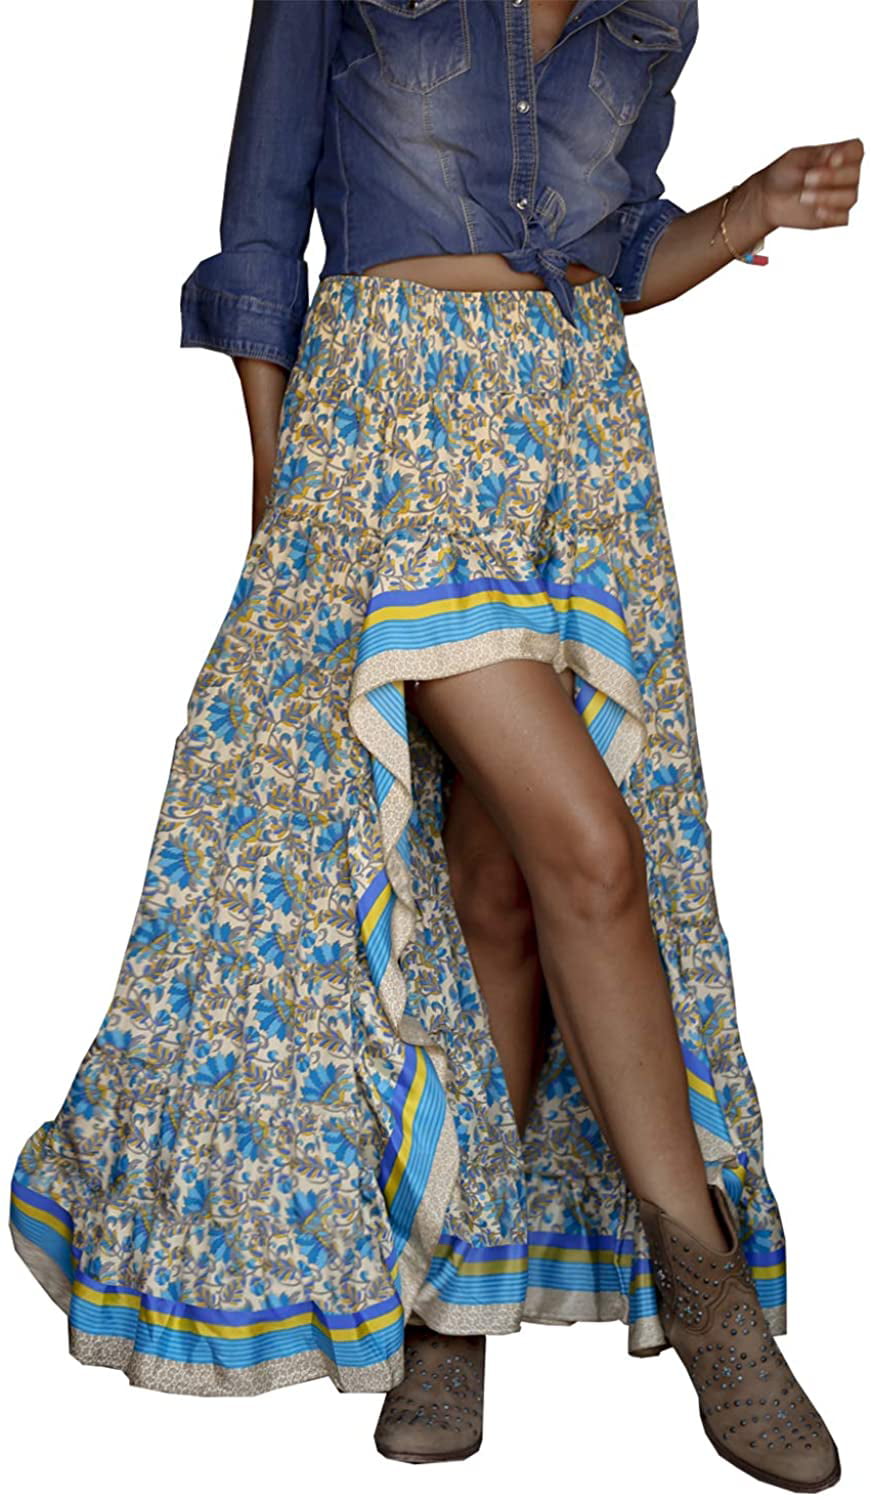 BTFBM Women Boho Floral Print Long Skirts Dress Chic High Low Side Split Ruffle Hem Elastic Waist Swing Maxi Dresses 